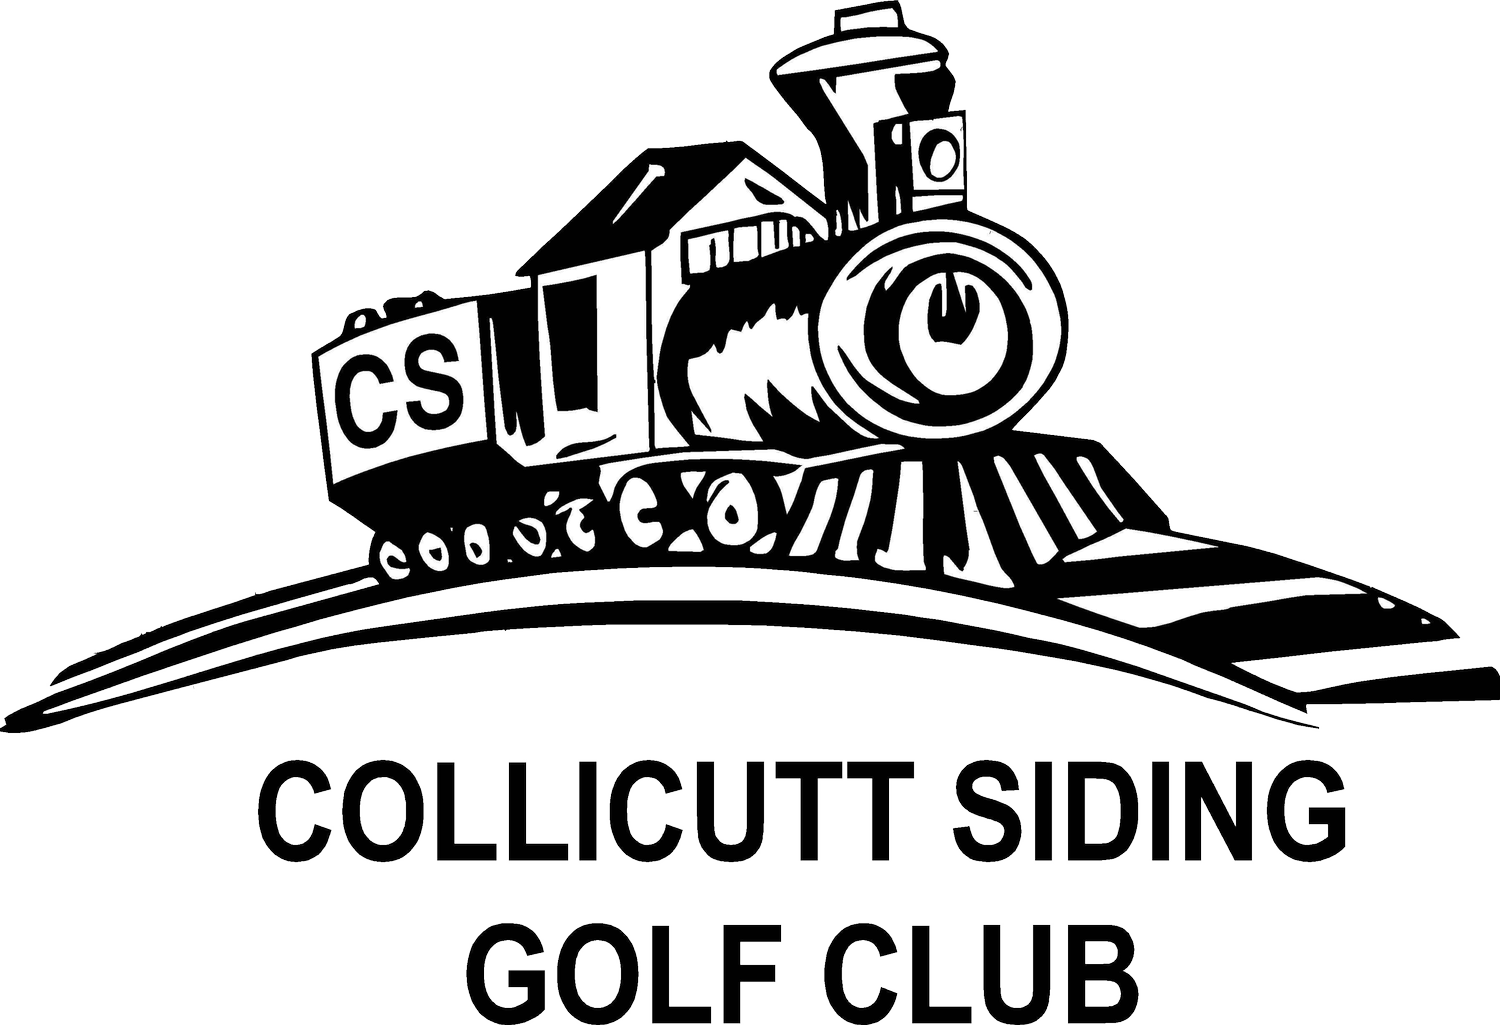 Collicutt Siding Golf Club - Your Home for Prairie Golf